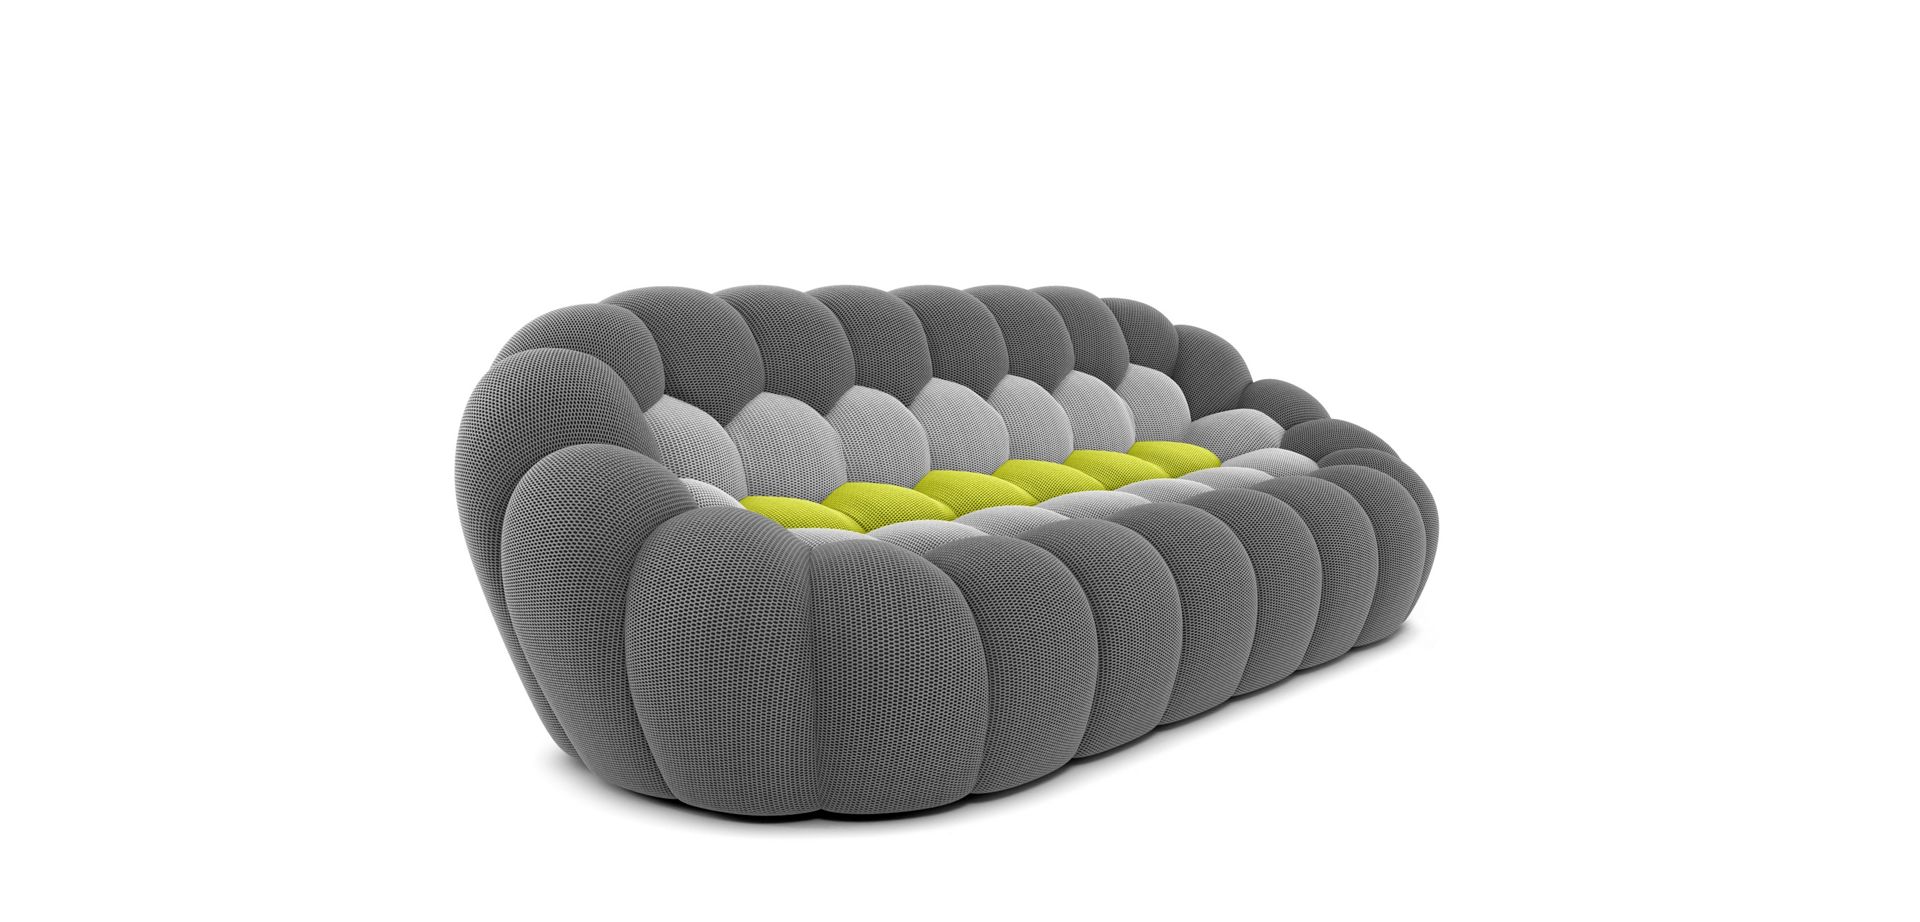 gran sofá 3 plazas - techno 3D image number 8